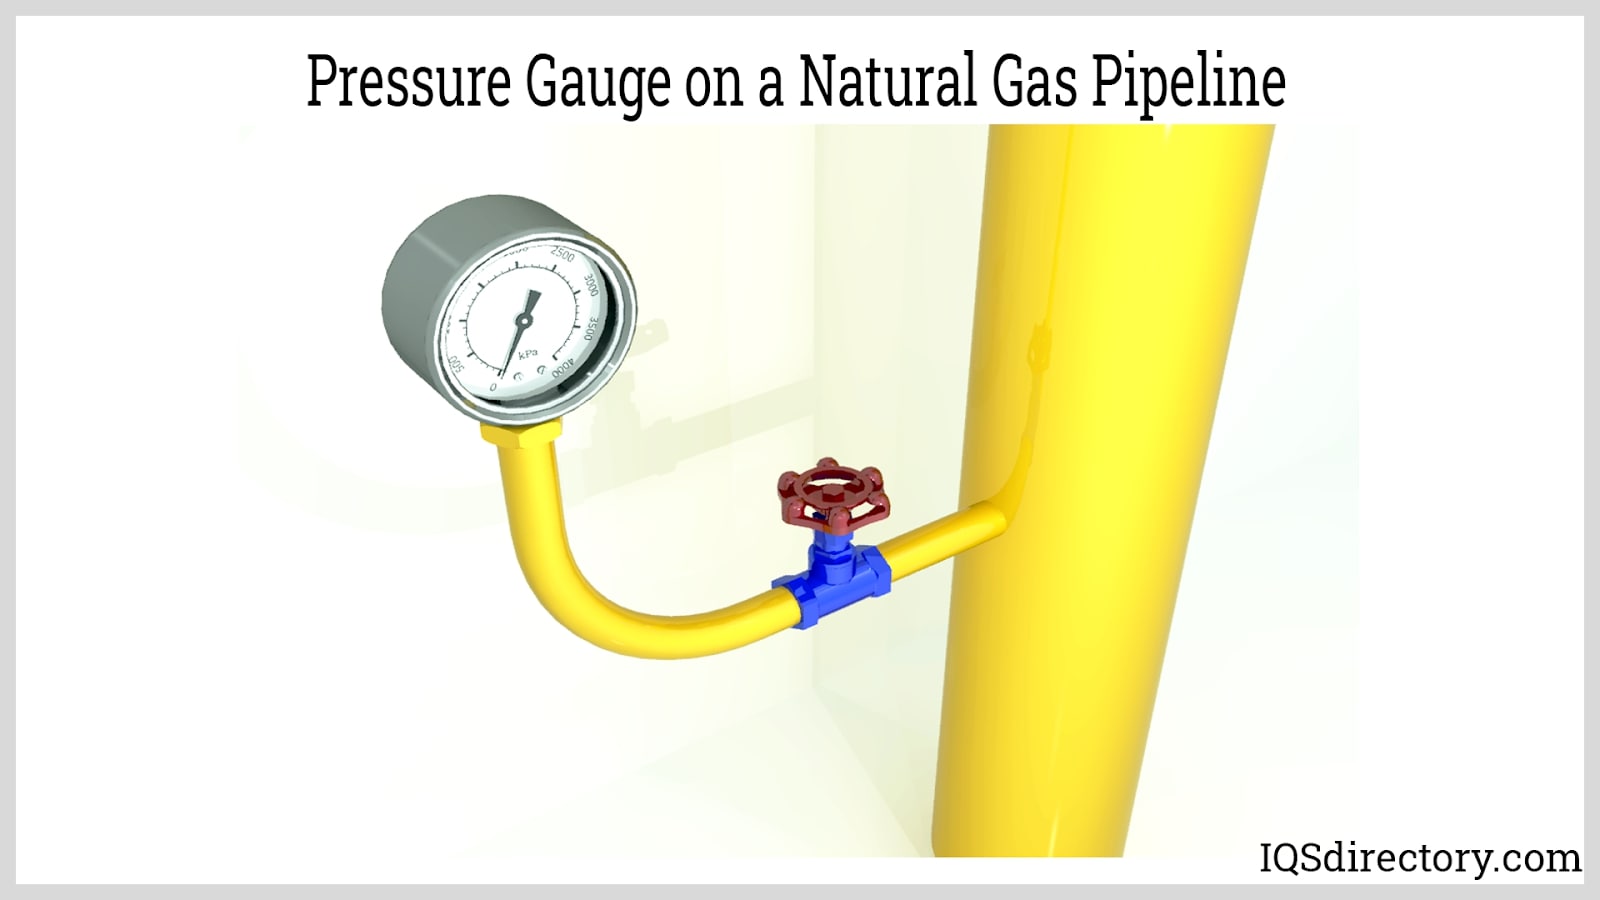 Pressure Gauge on a Natural Gas Pipeline